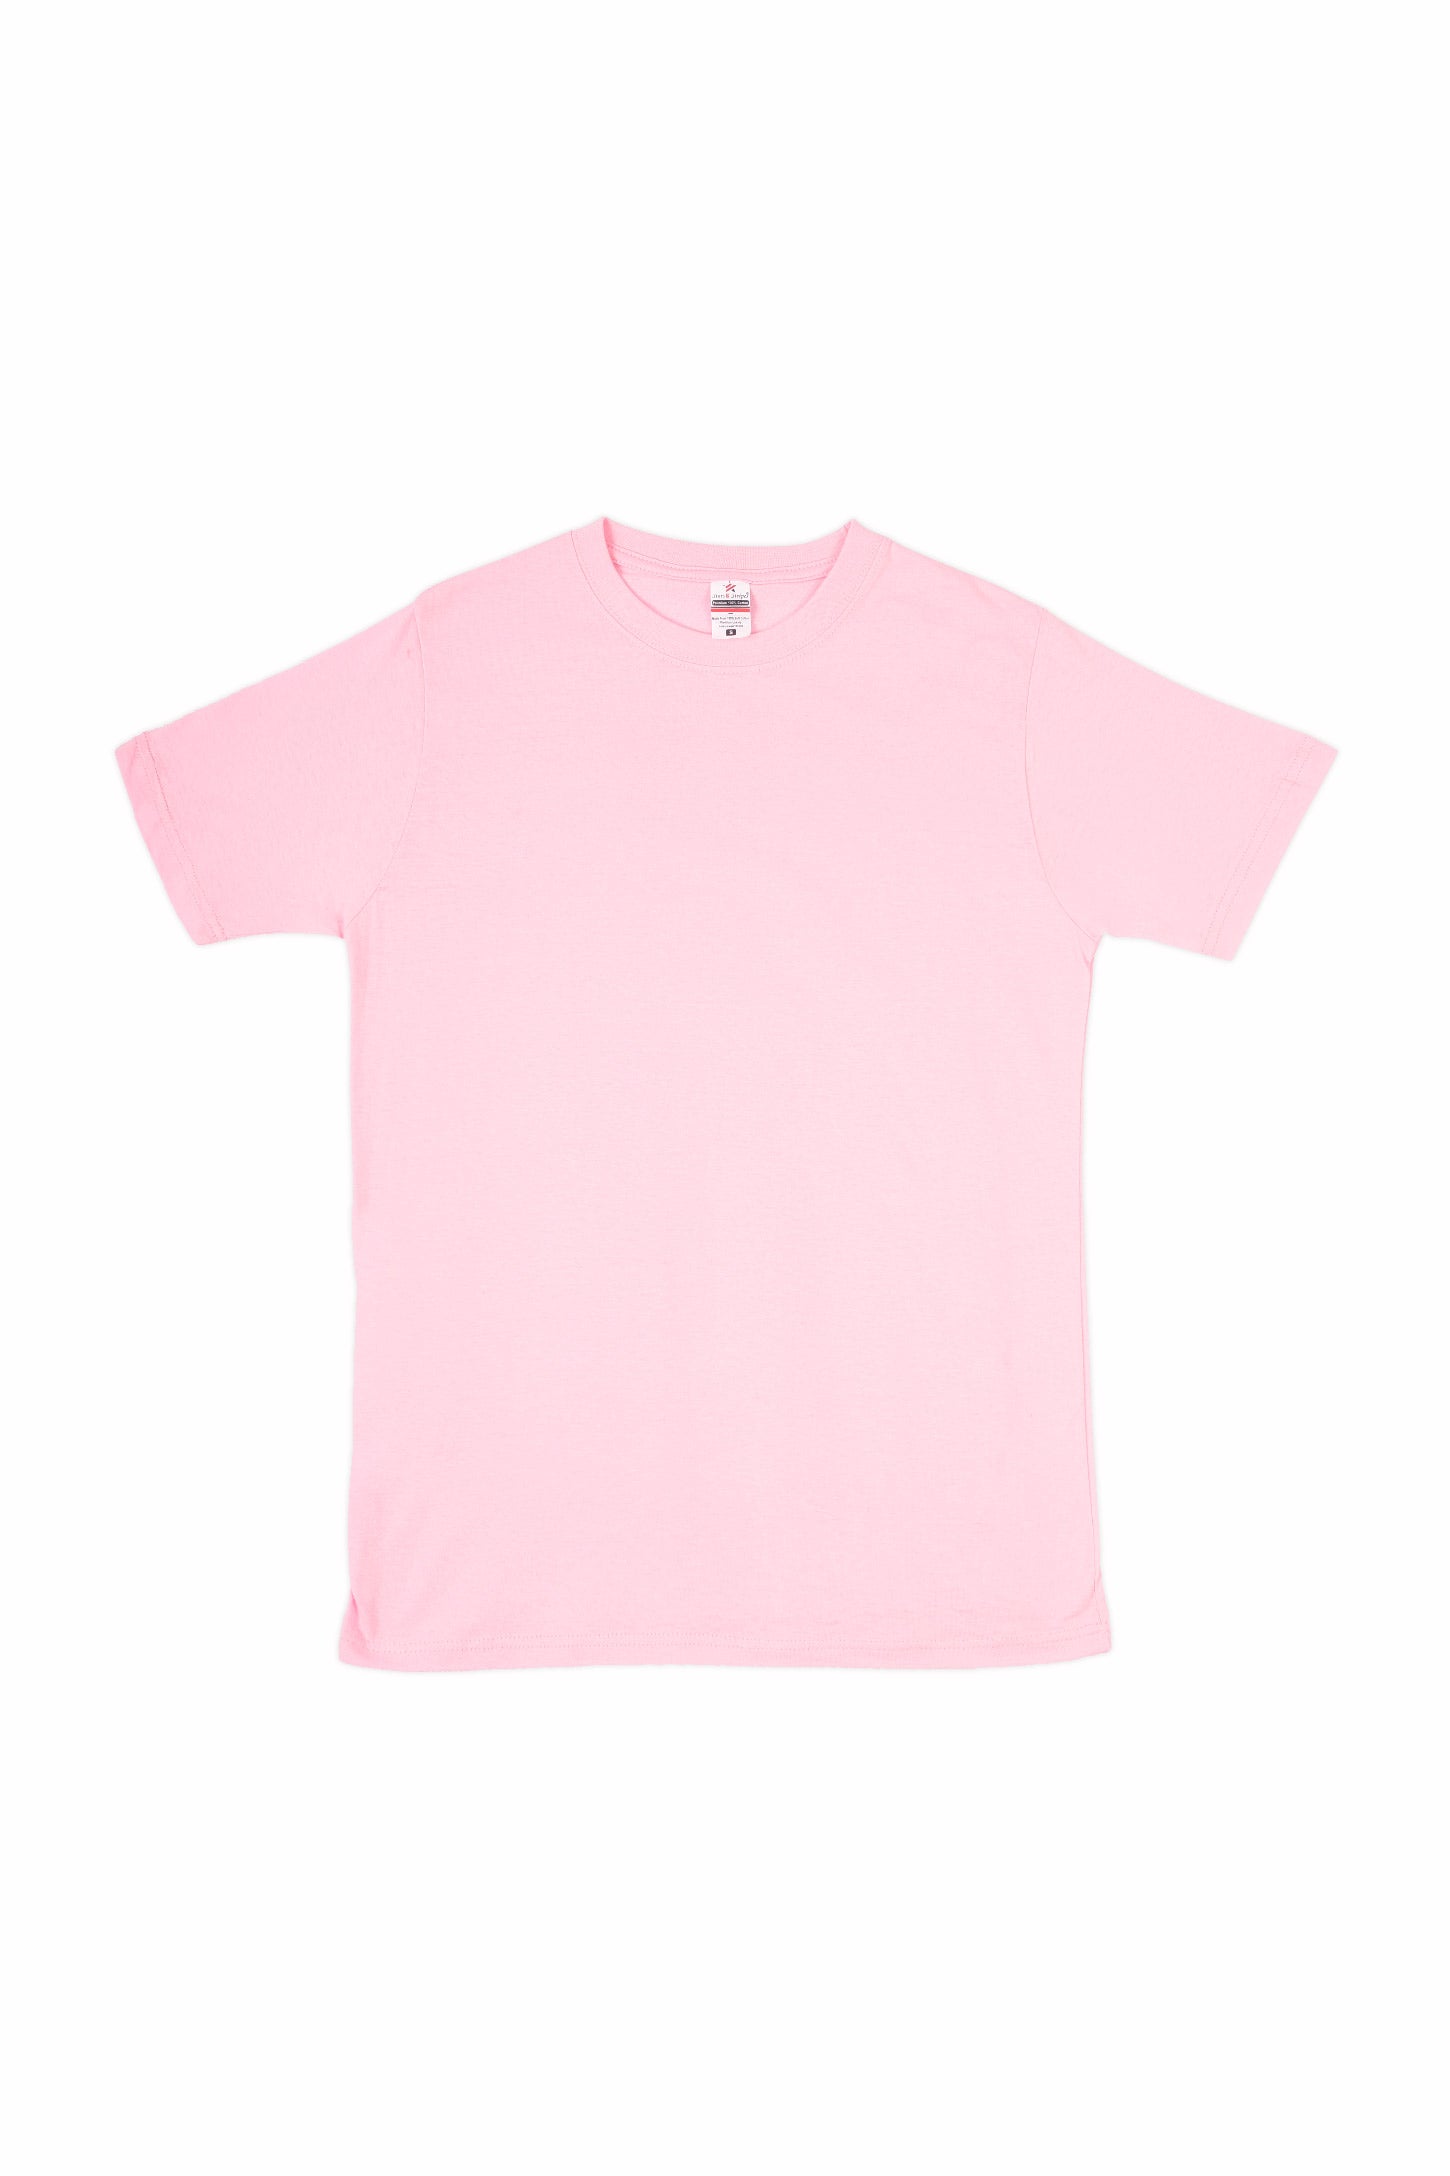 Sustainable Cotton Men's T-Shirt - Blank - Light pink